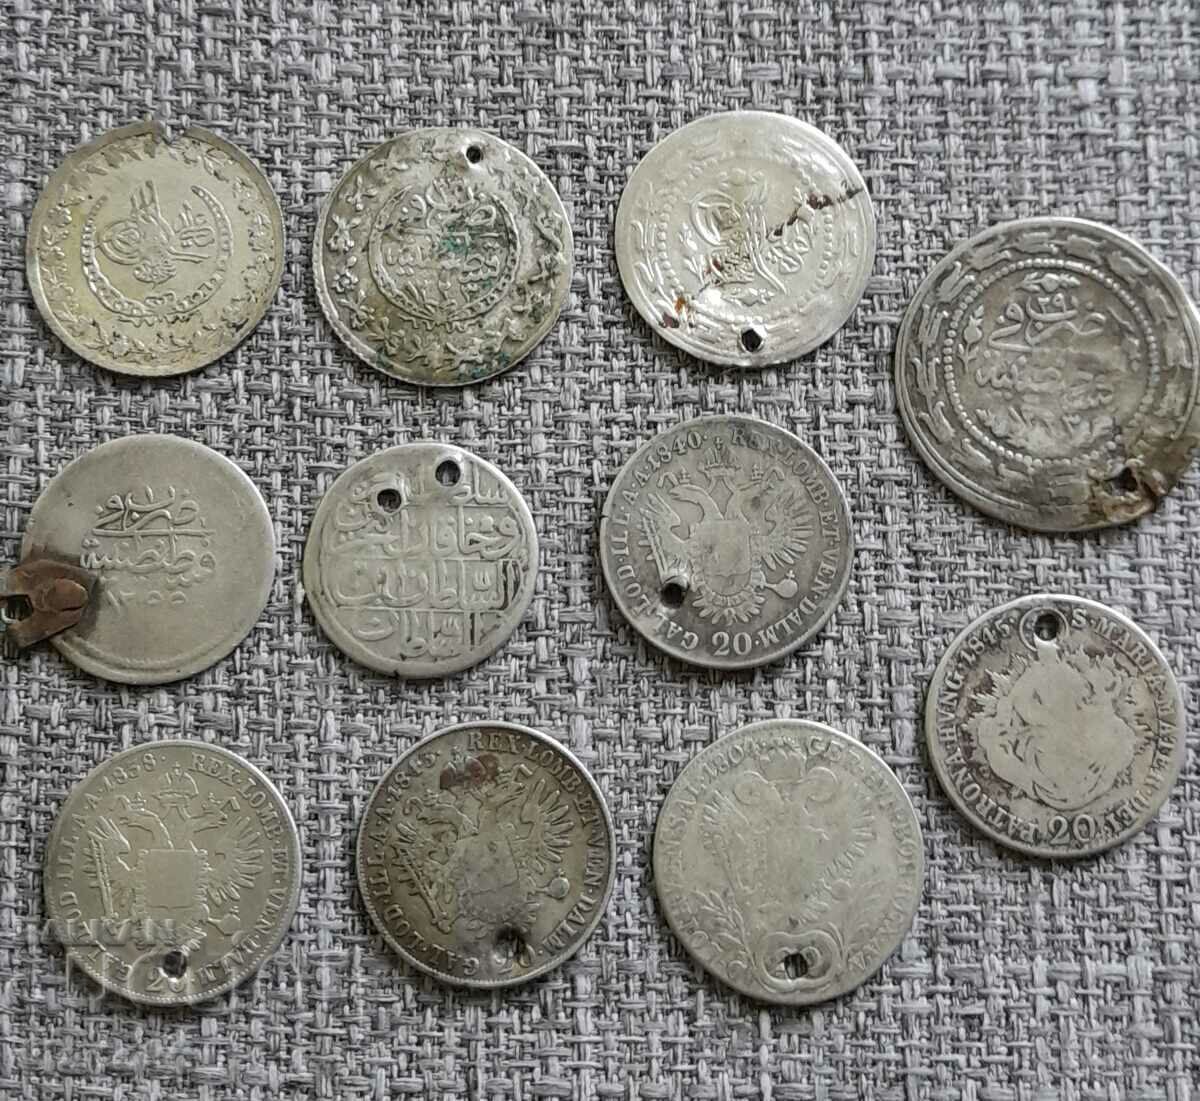 11 silver Ottoman and Austrian coins